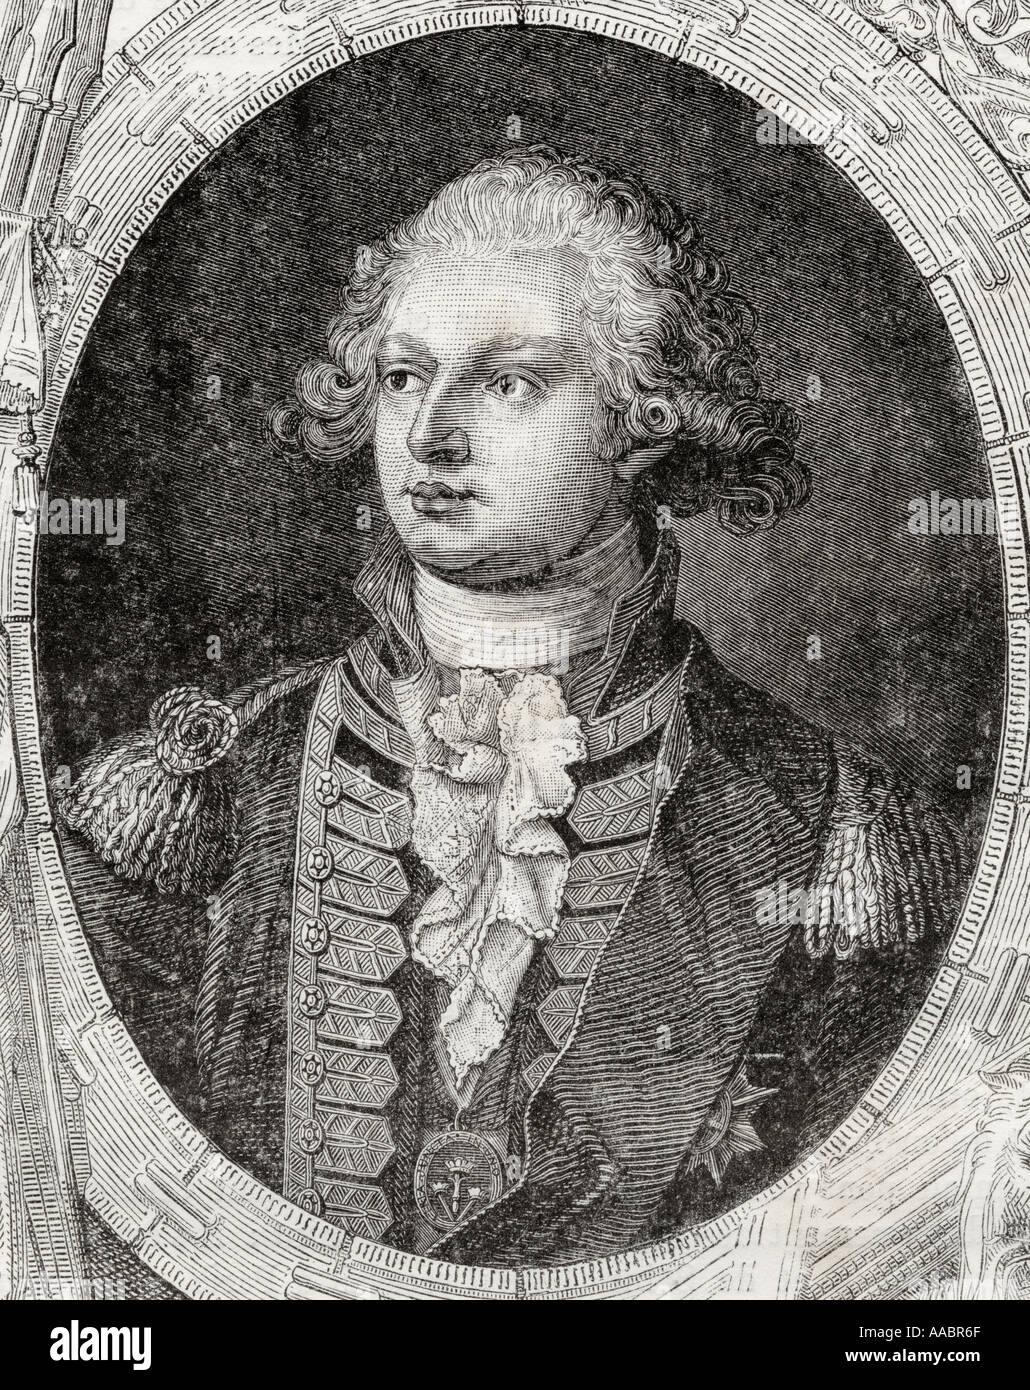 Prince Frederick Augustus, Duke of York and Albany, 1763 - 1827. Stock Photo